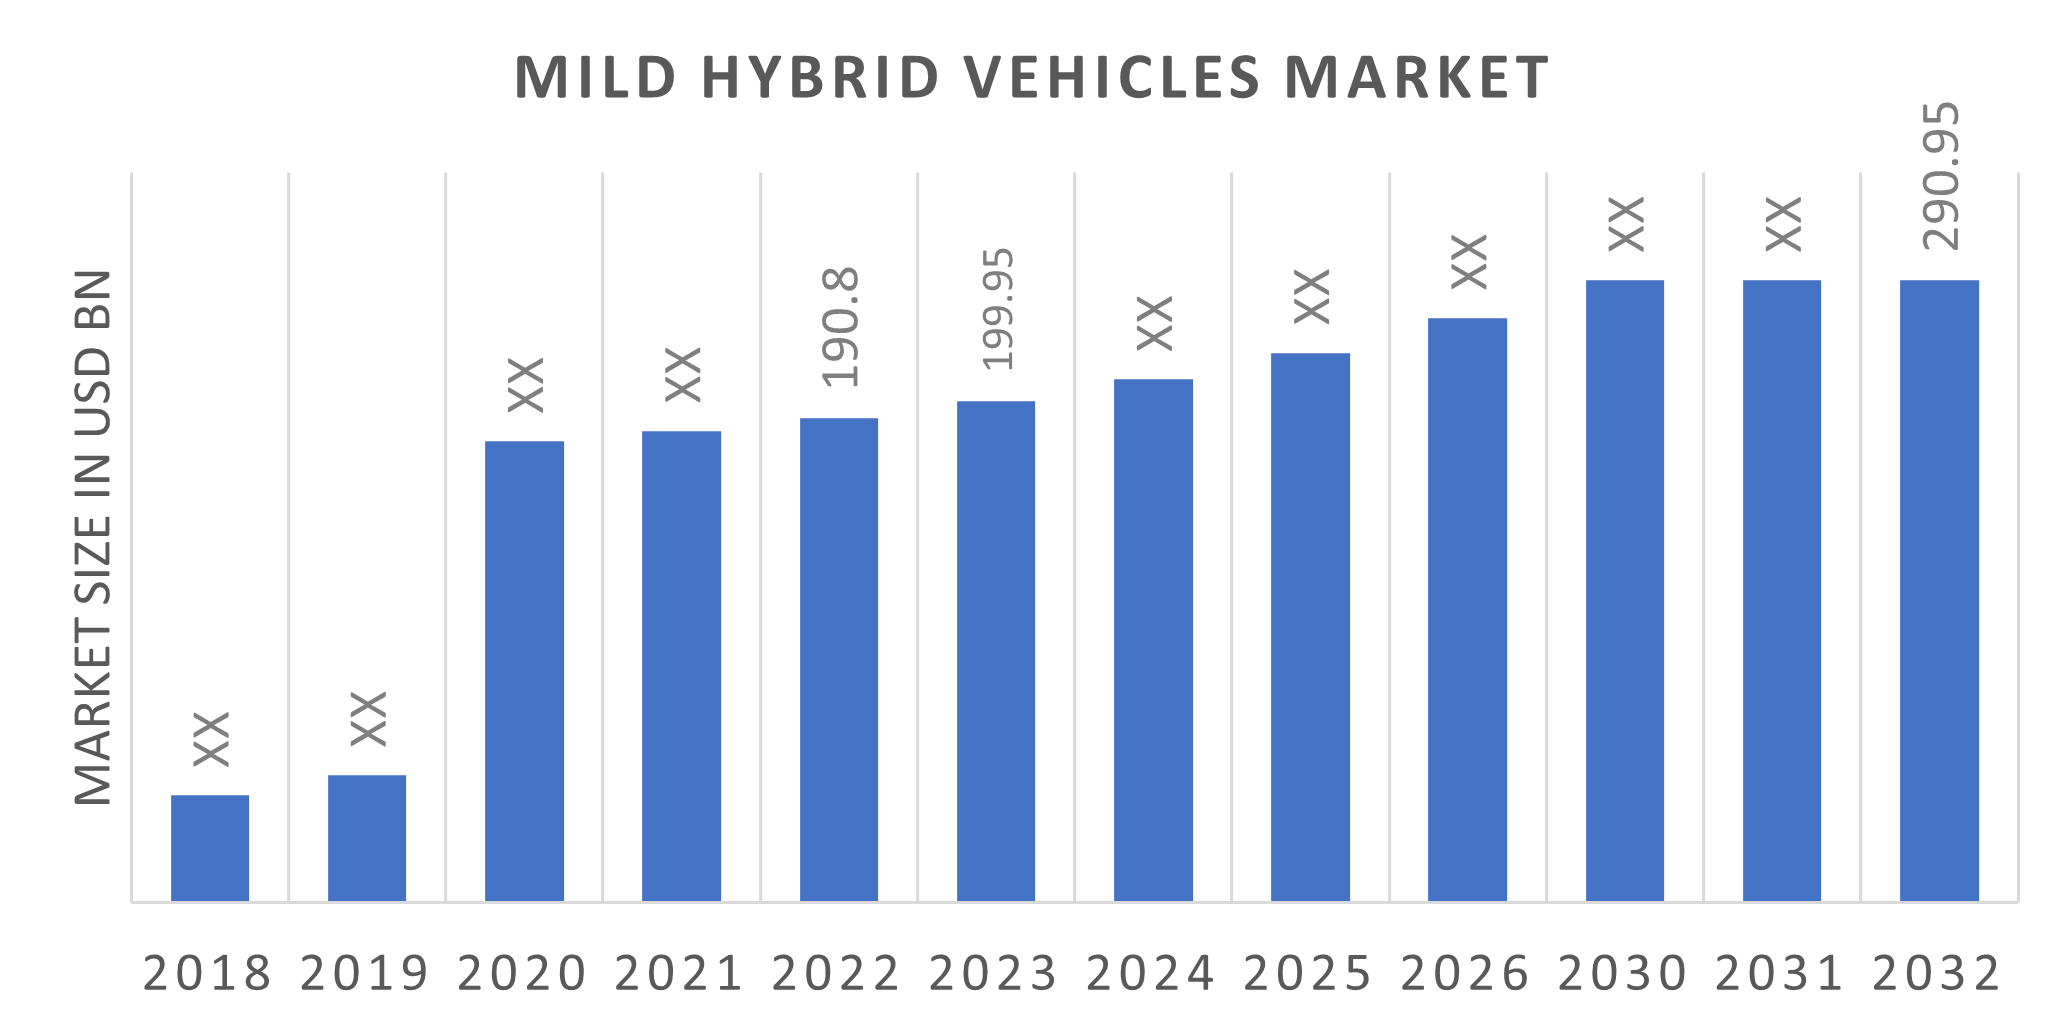 Mild Hybrid Vehicles Market Size, Share, Growth Report, 2032